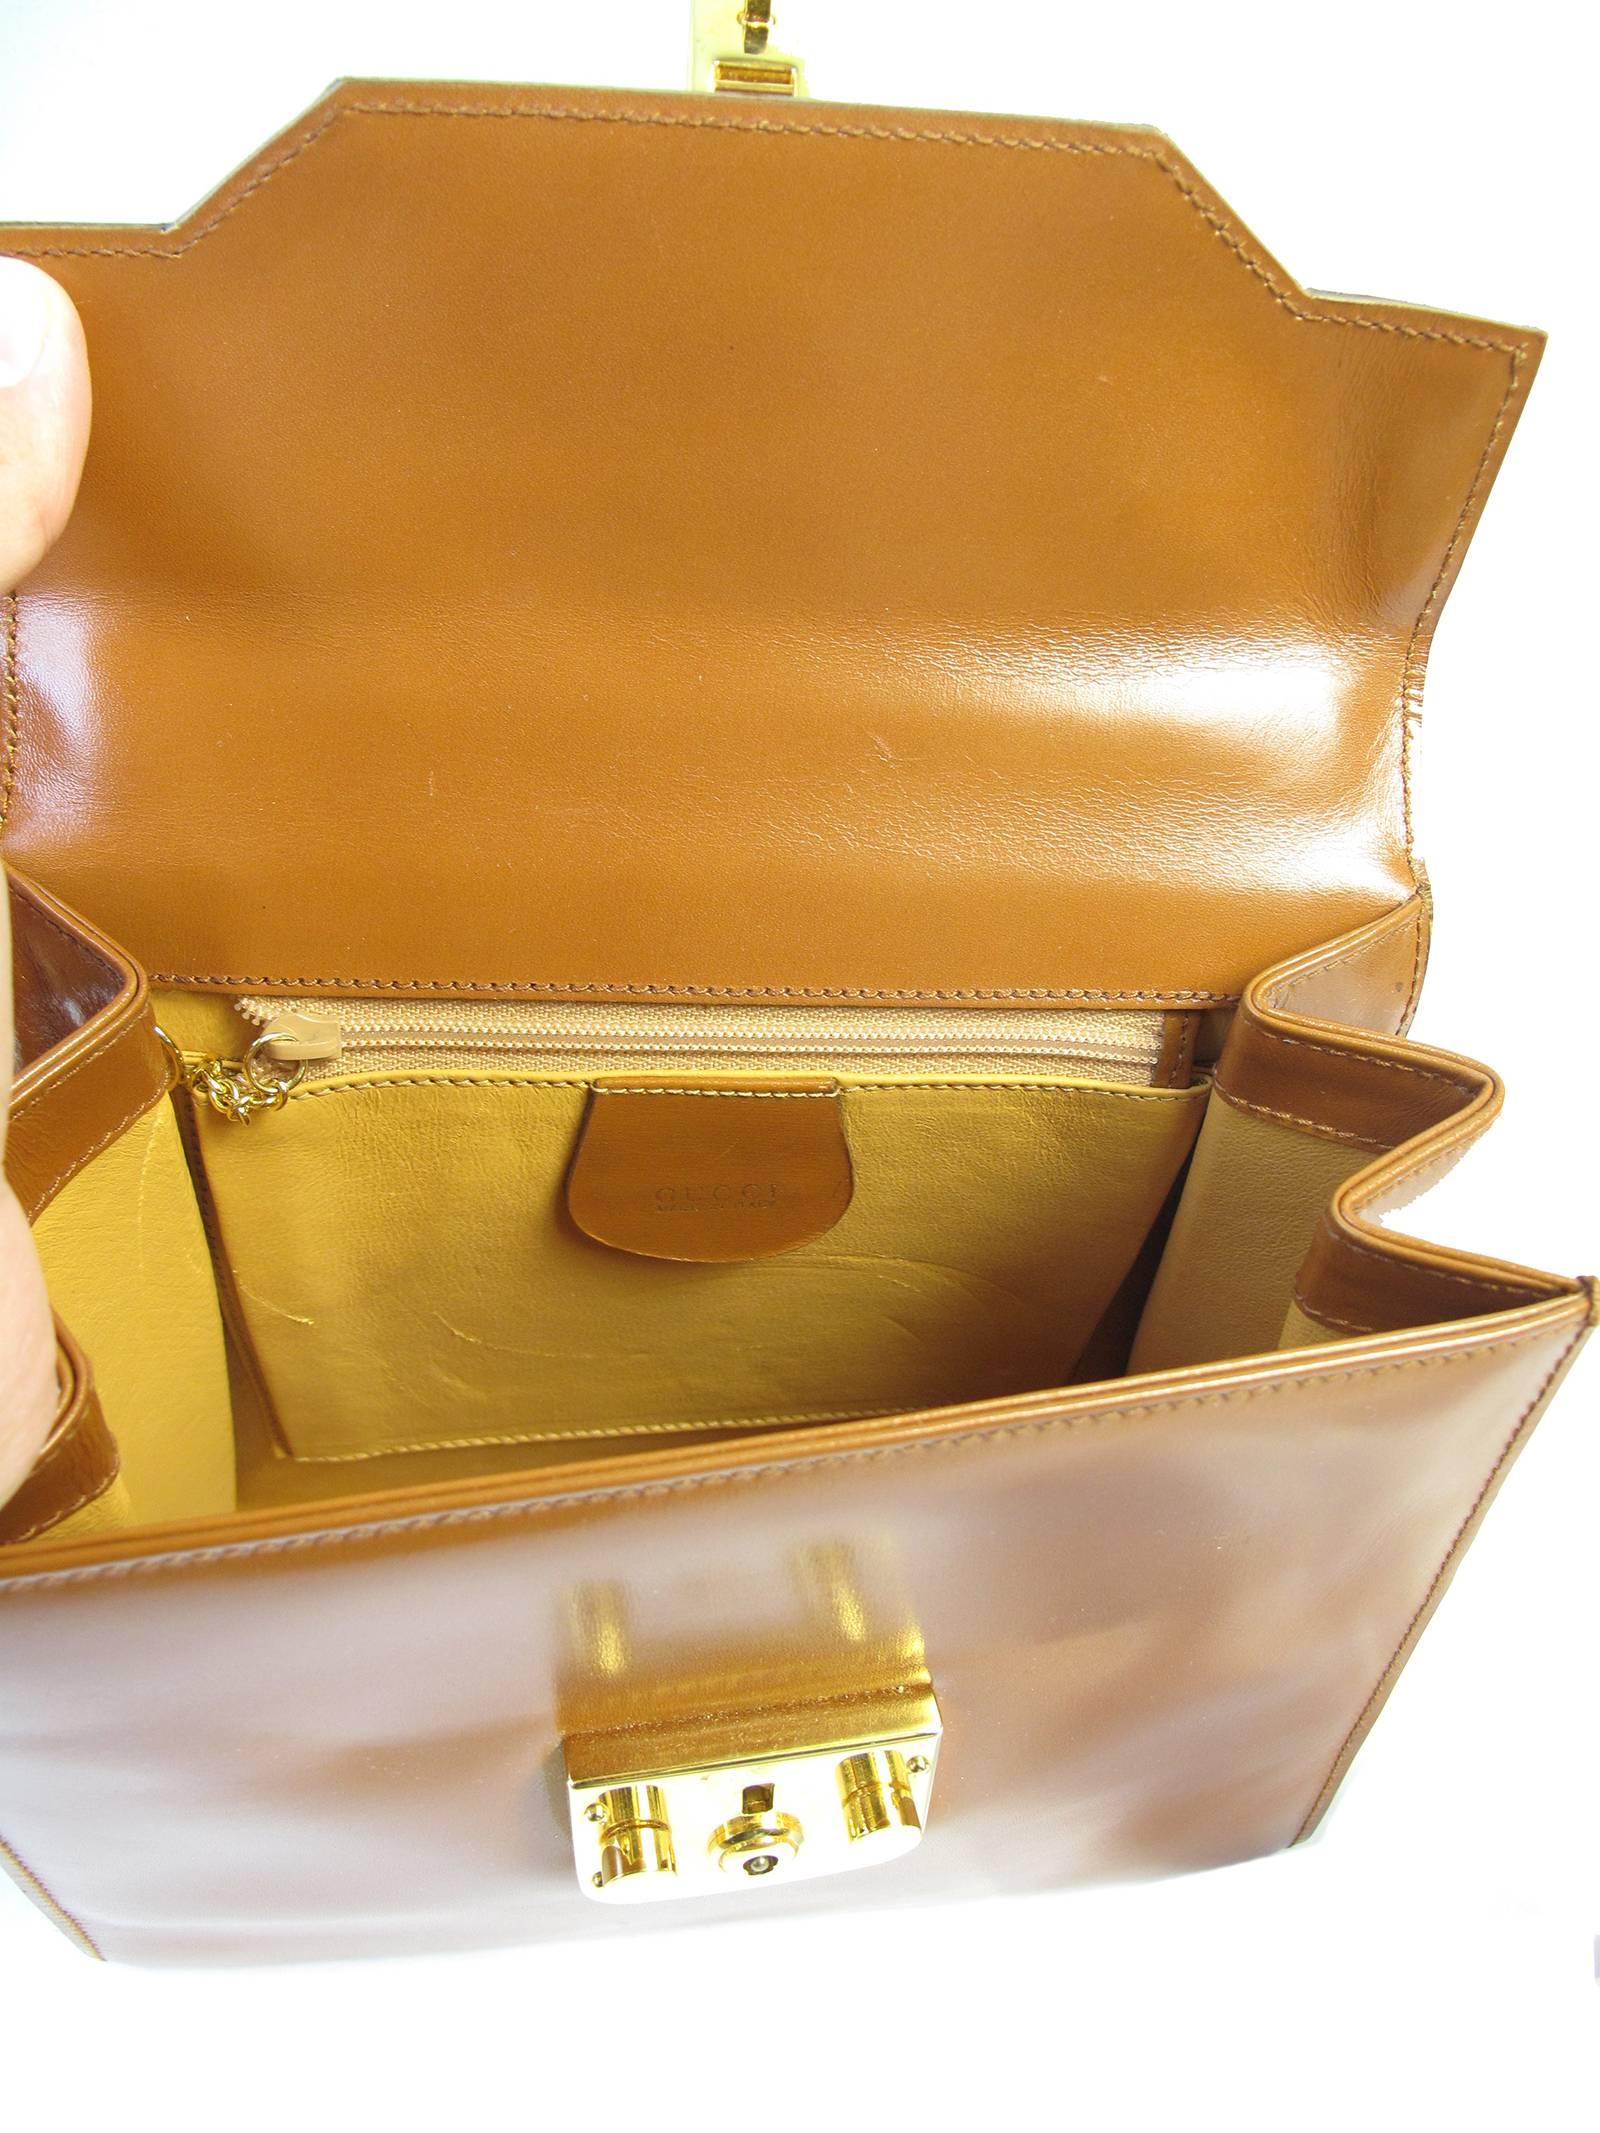 caramel leather handbag